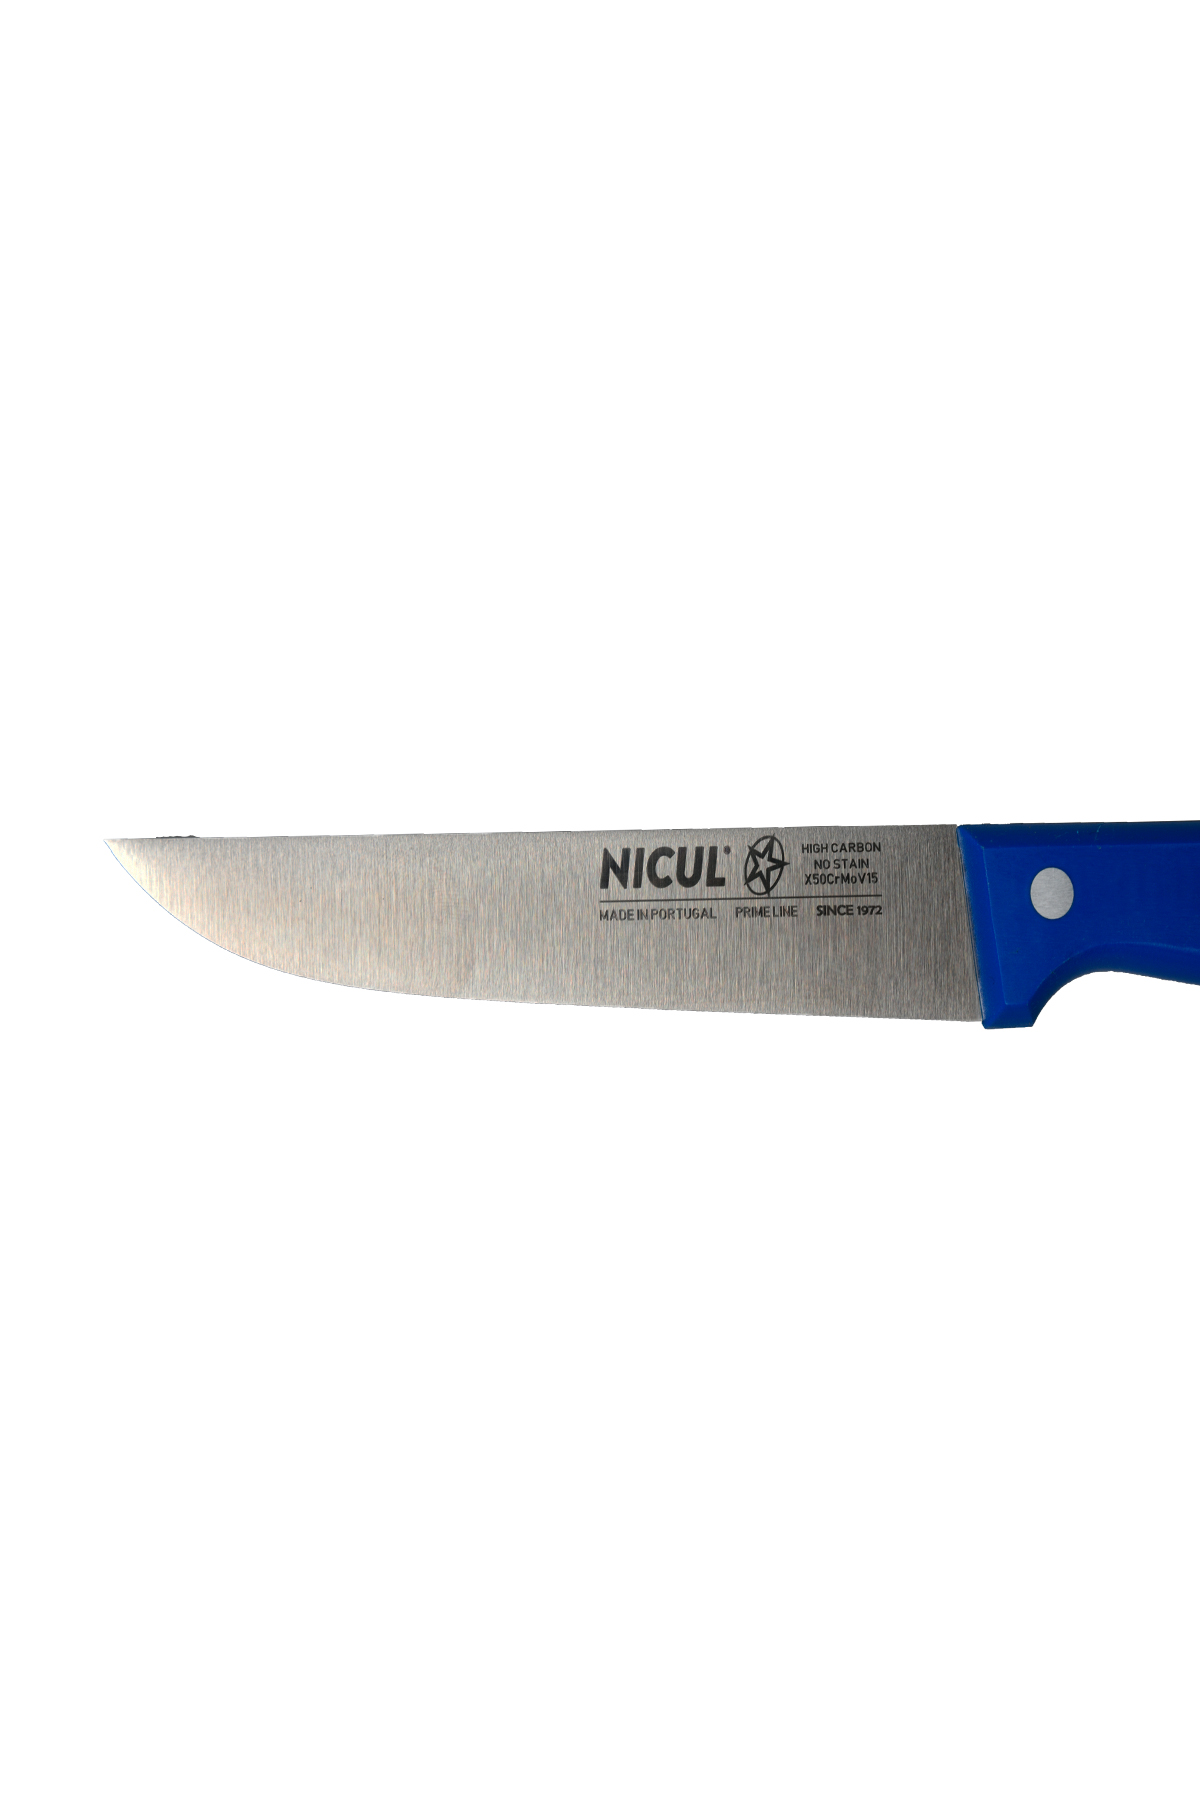 Nicul Bıçak 23 cm